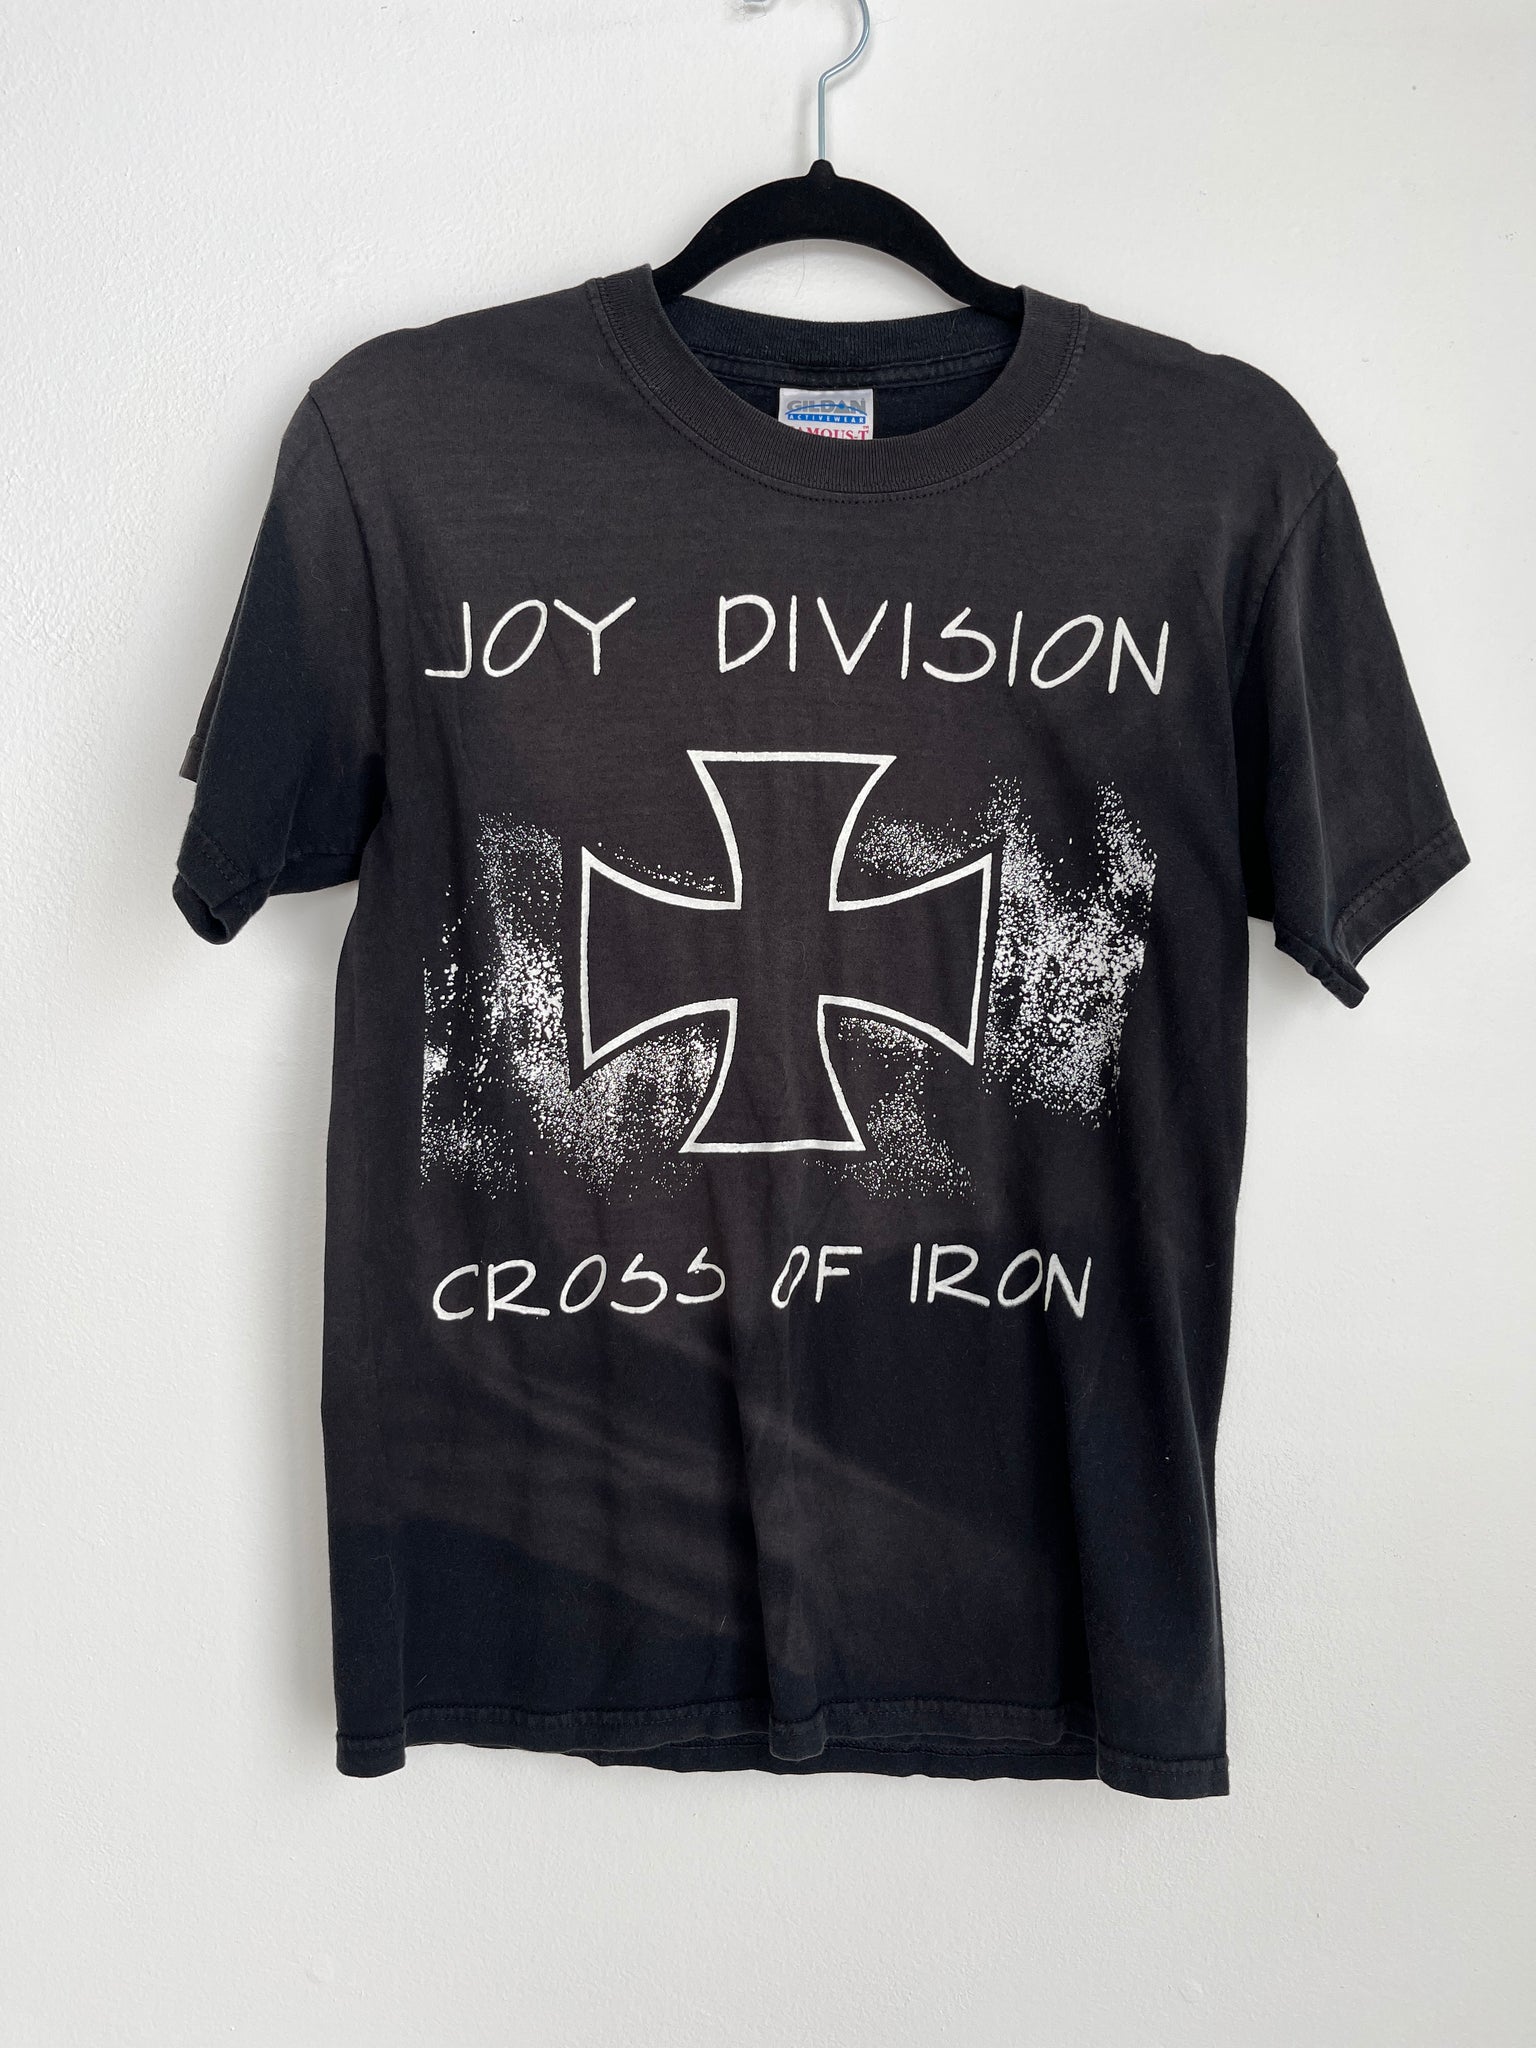 1990s T-SHIRT- Joy Division Cross of Iron